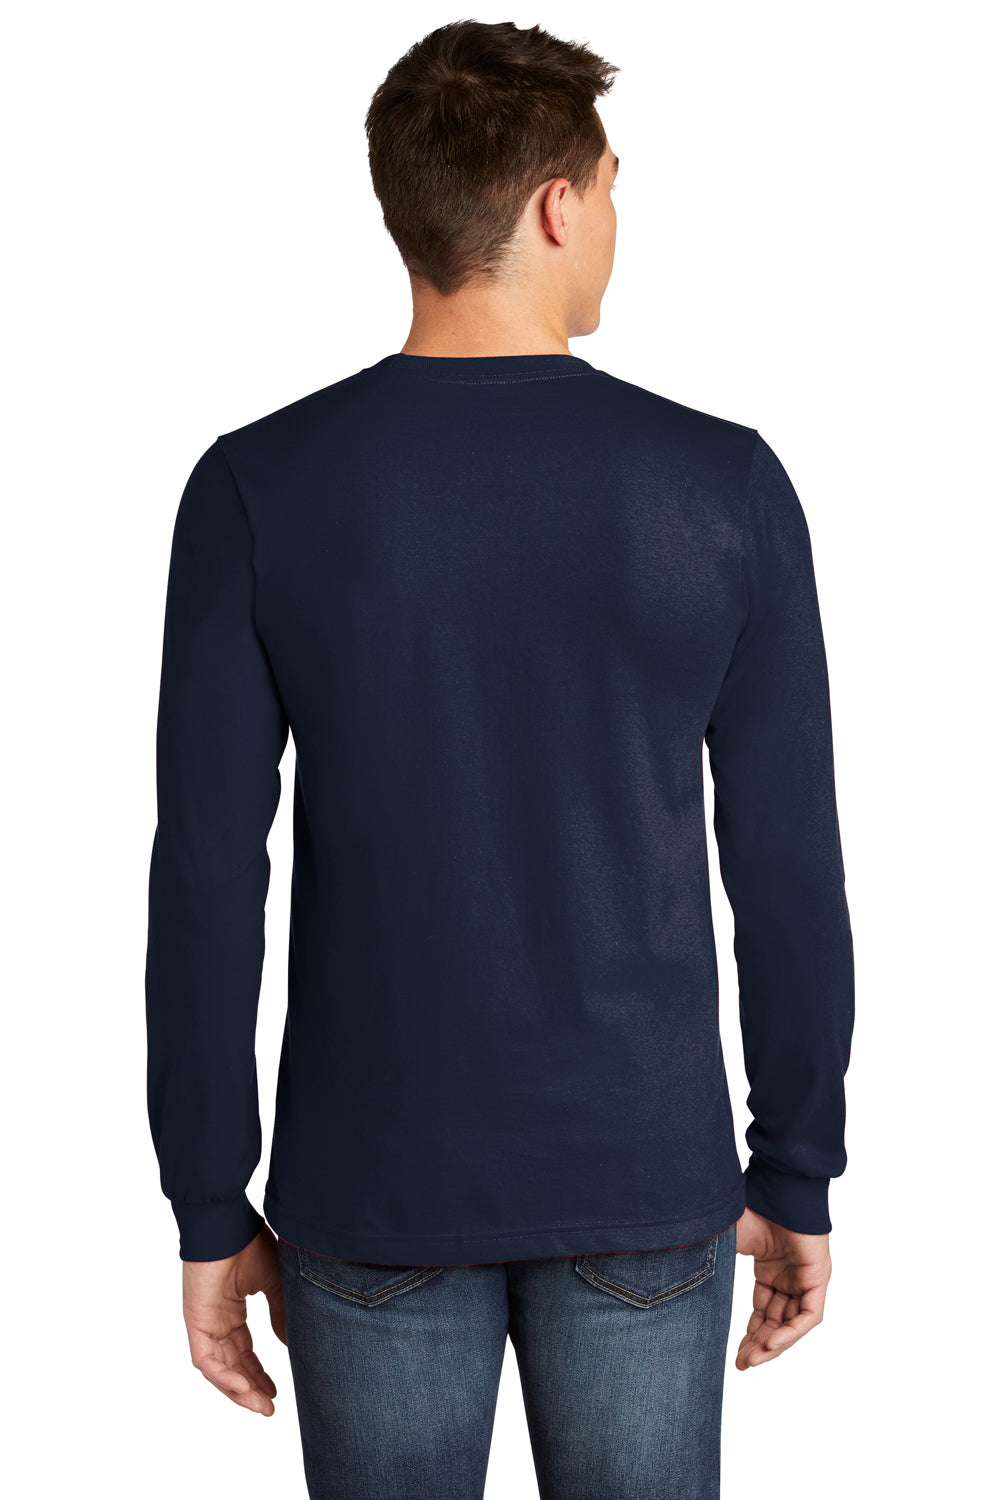 American Apparel 2007 Mens Fine Jersey Long Sleeve Crewneck T-Shirt Navy Blue Model Back